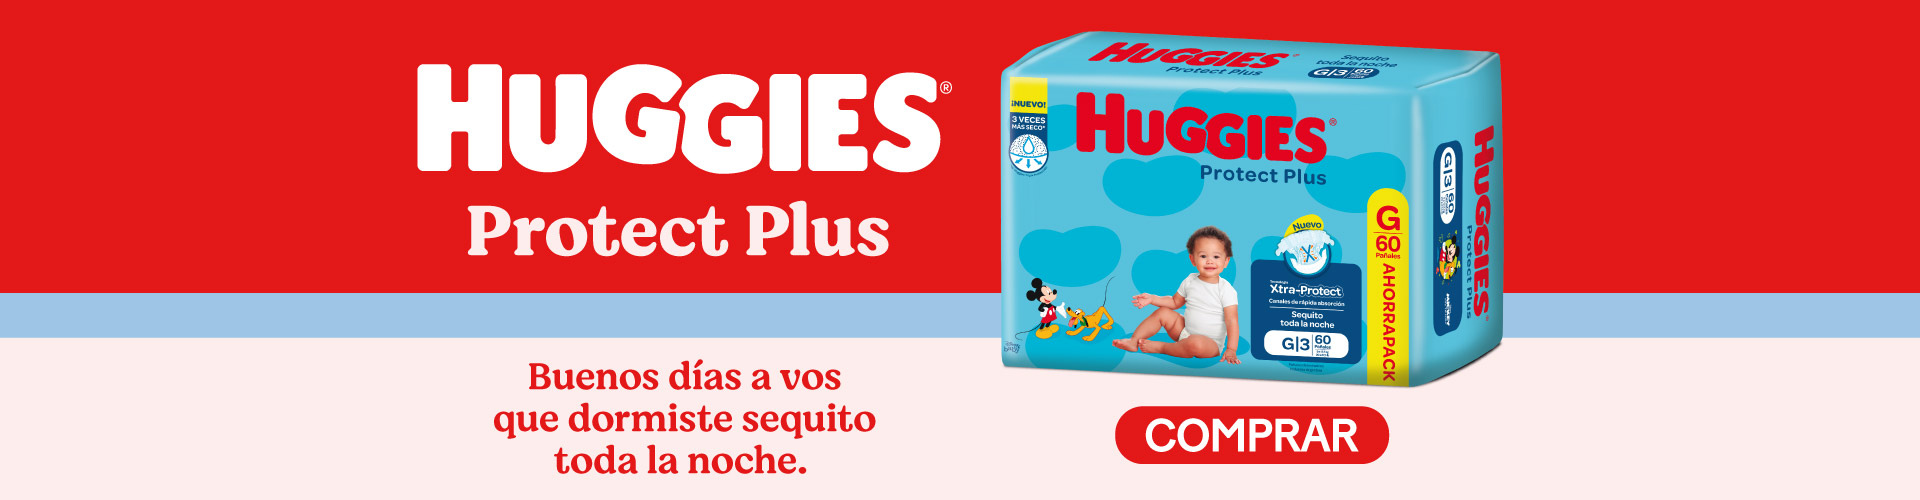 Pañales Hugies Protect Plus Pack Ahorro Unilever Home Slider